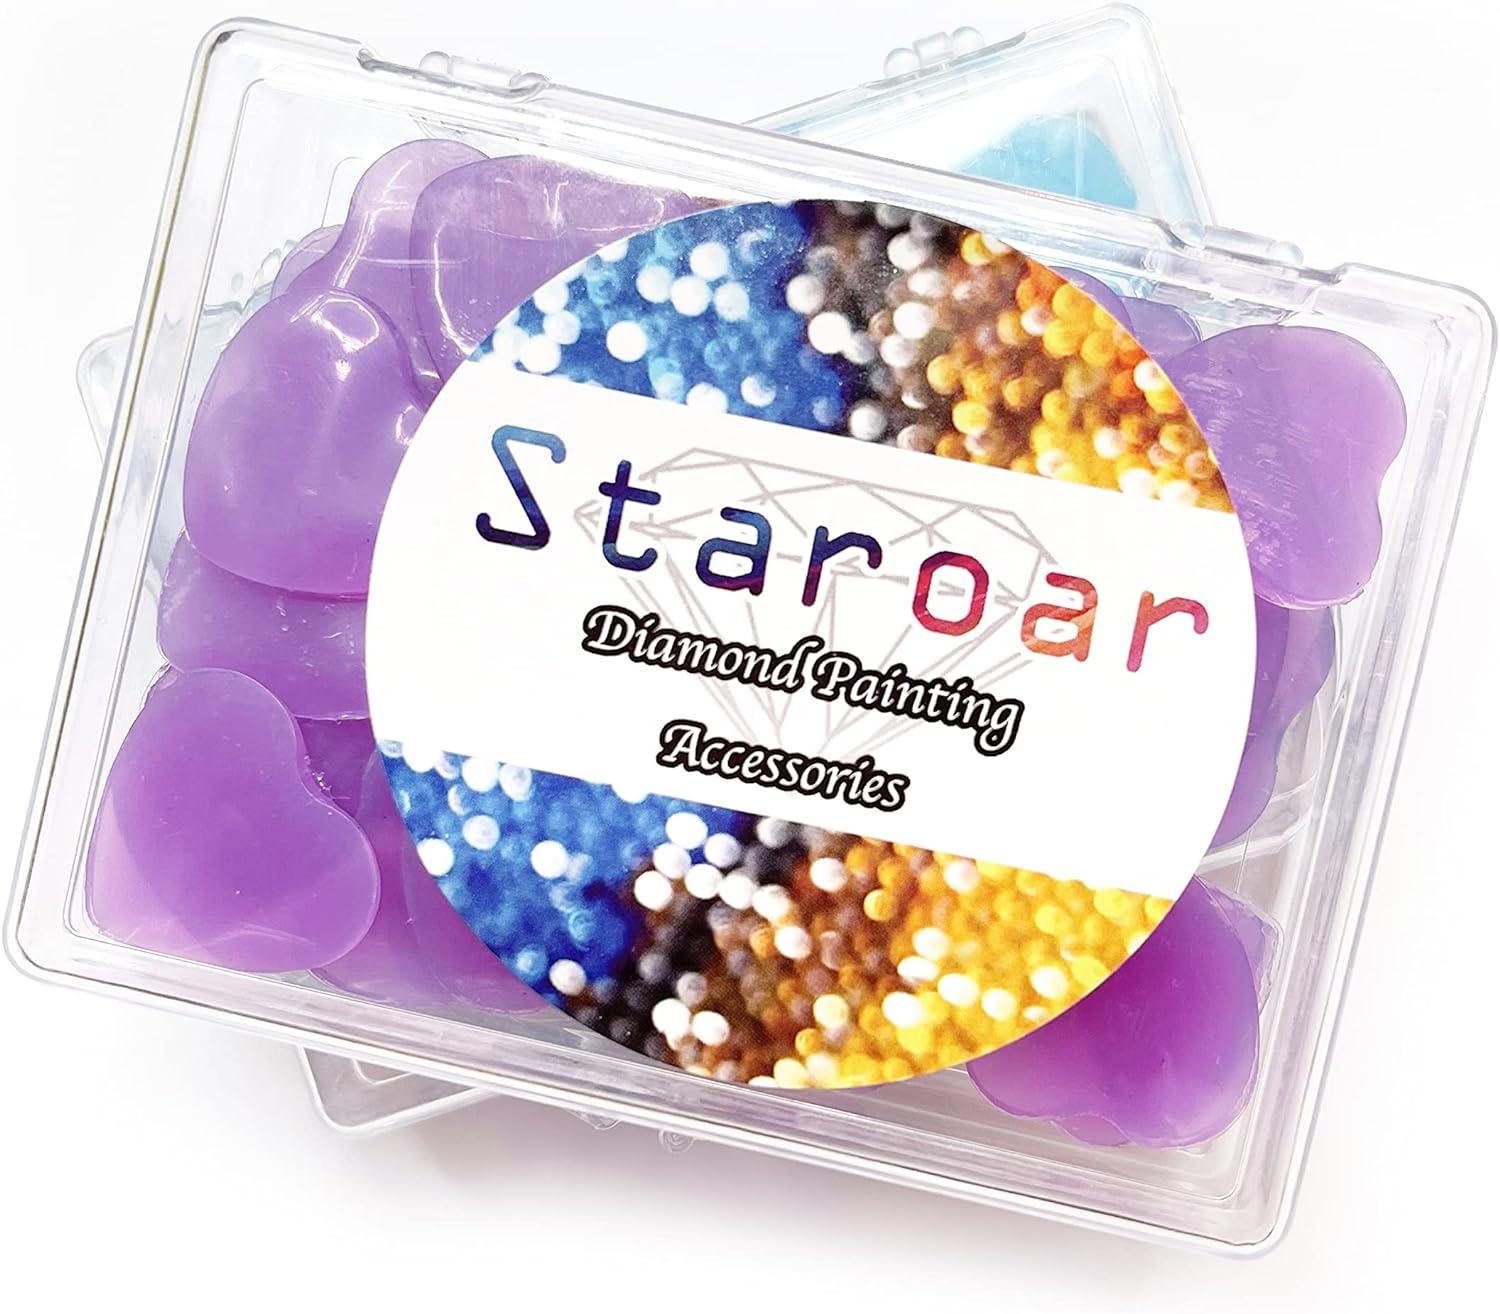 Staroar Diamond Painting Tools - 40 Pack of Wax for Diamond Panting Diamond  Art Accessories